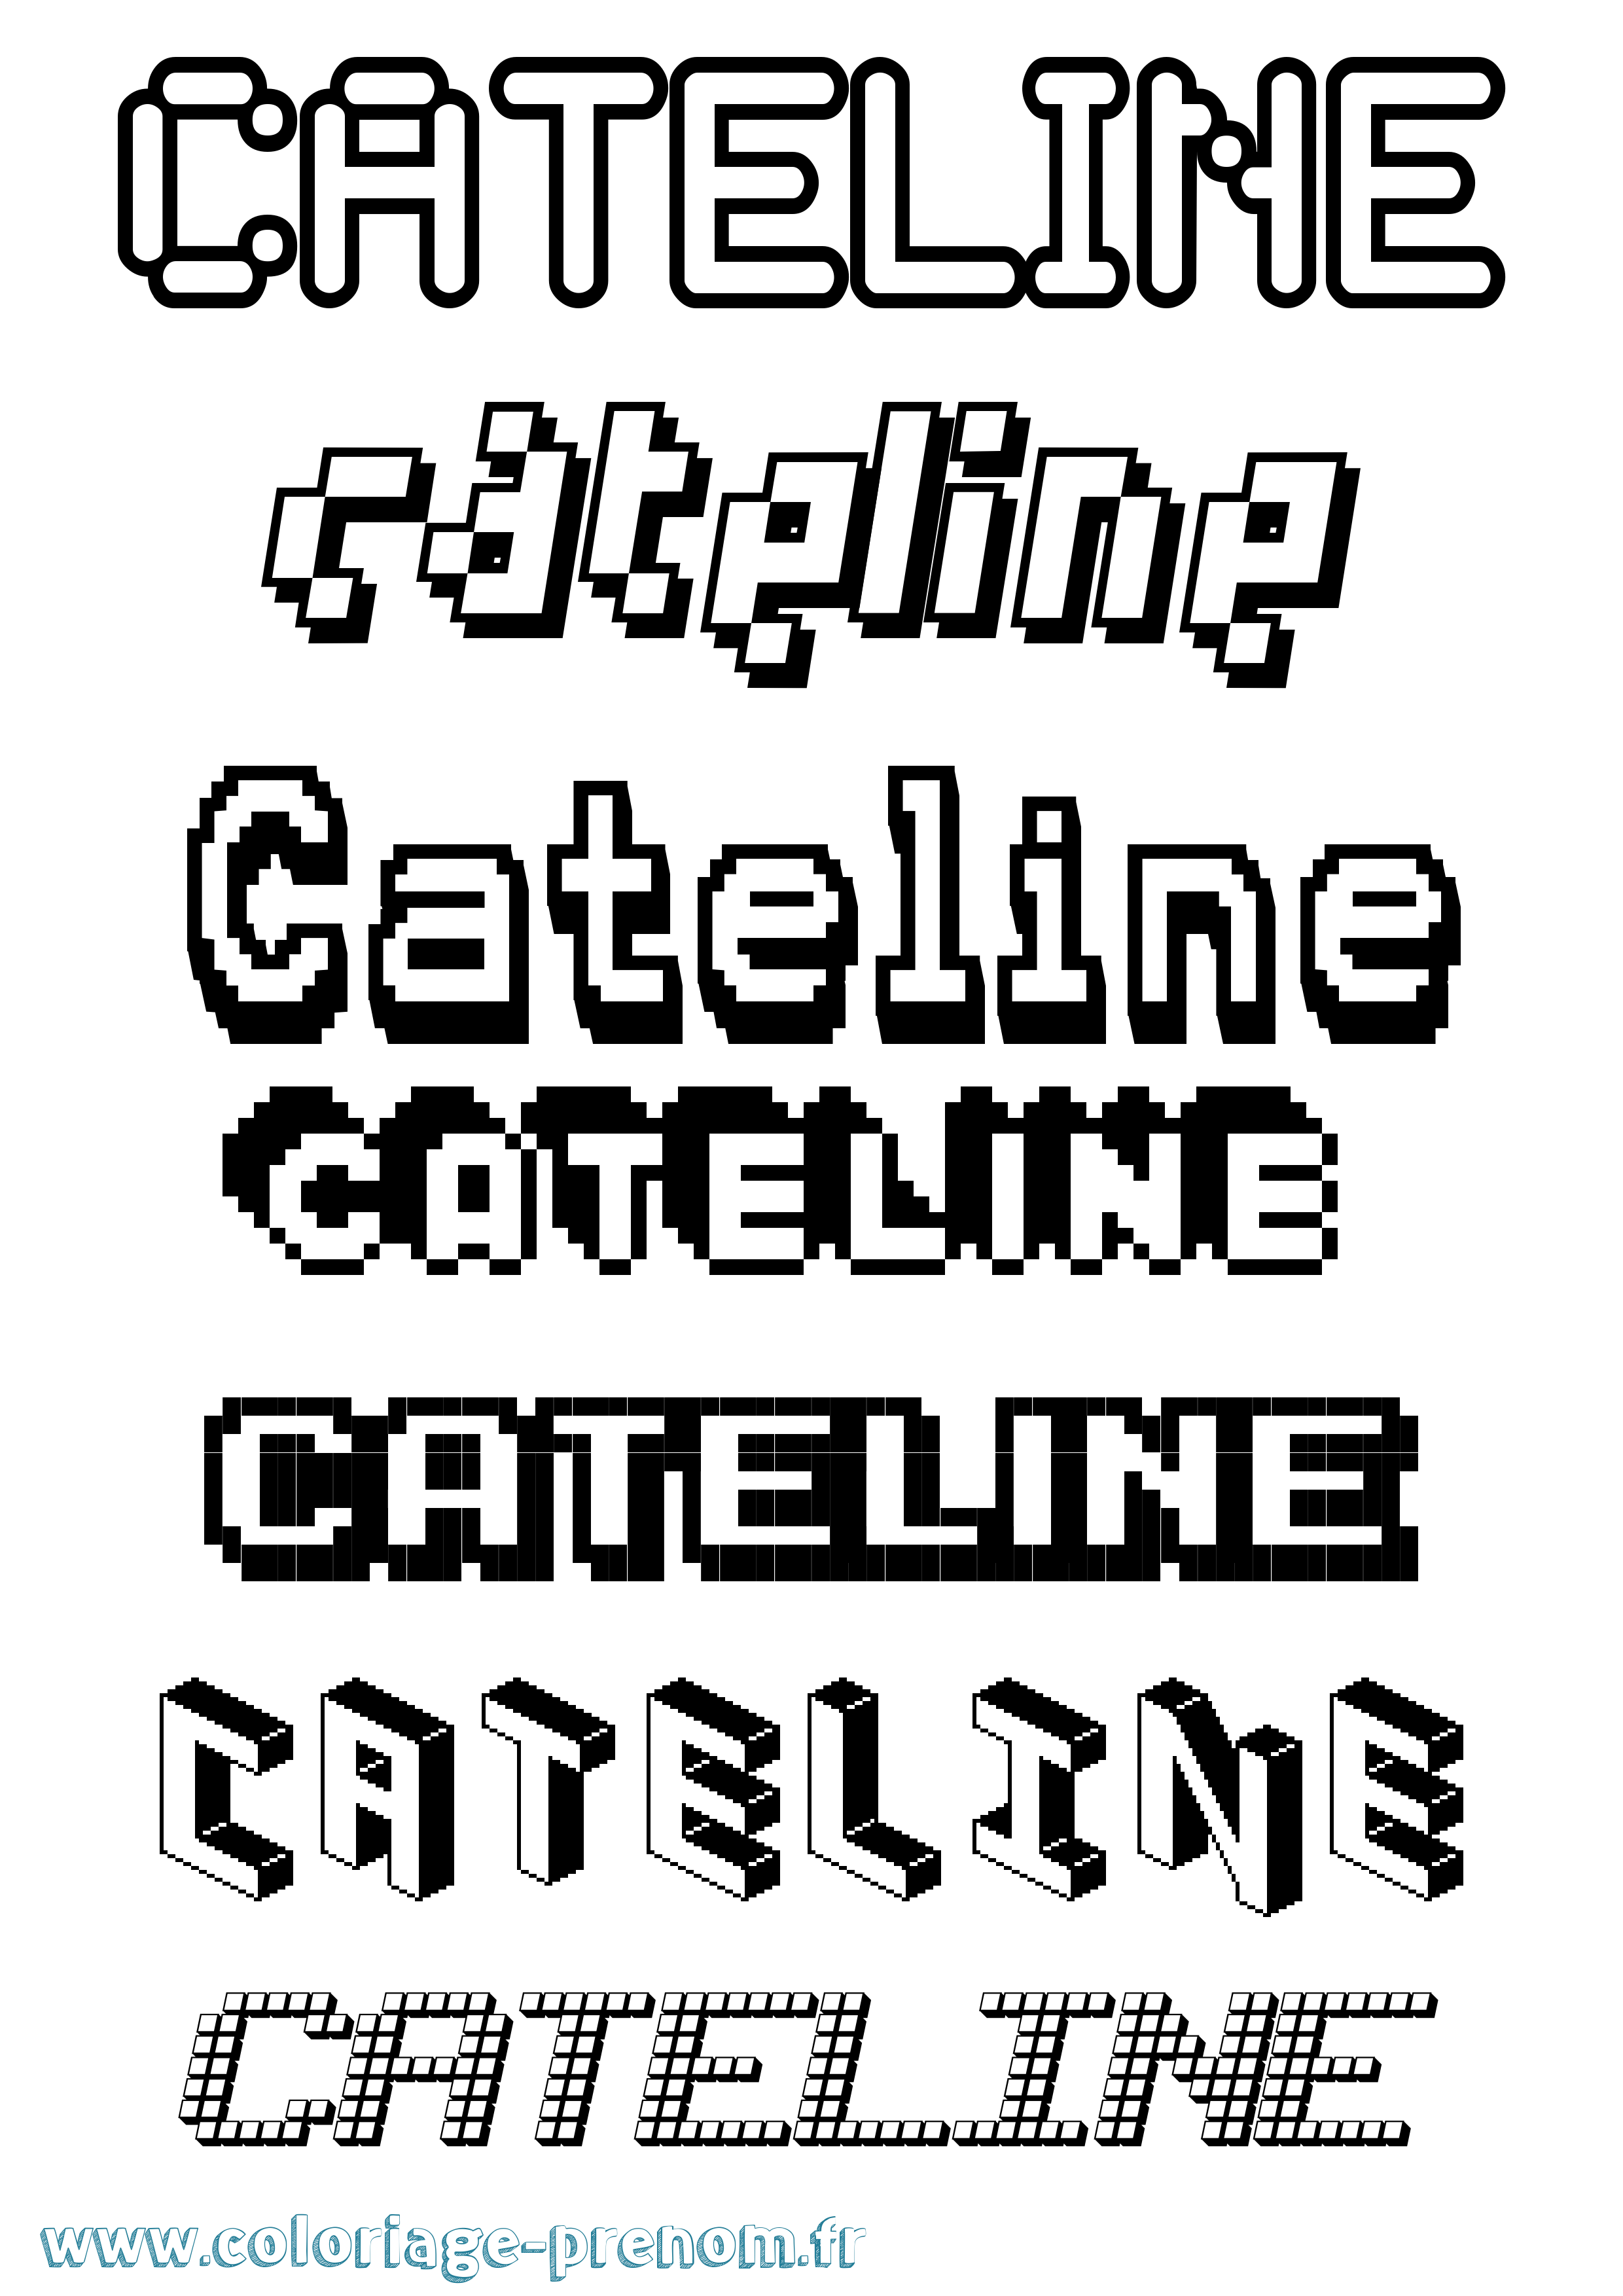 Coloriage prénom Cateline Pixel